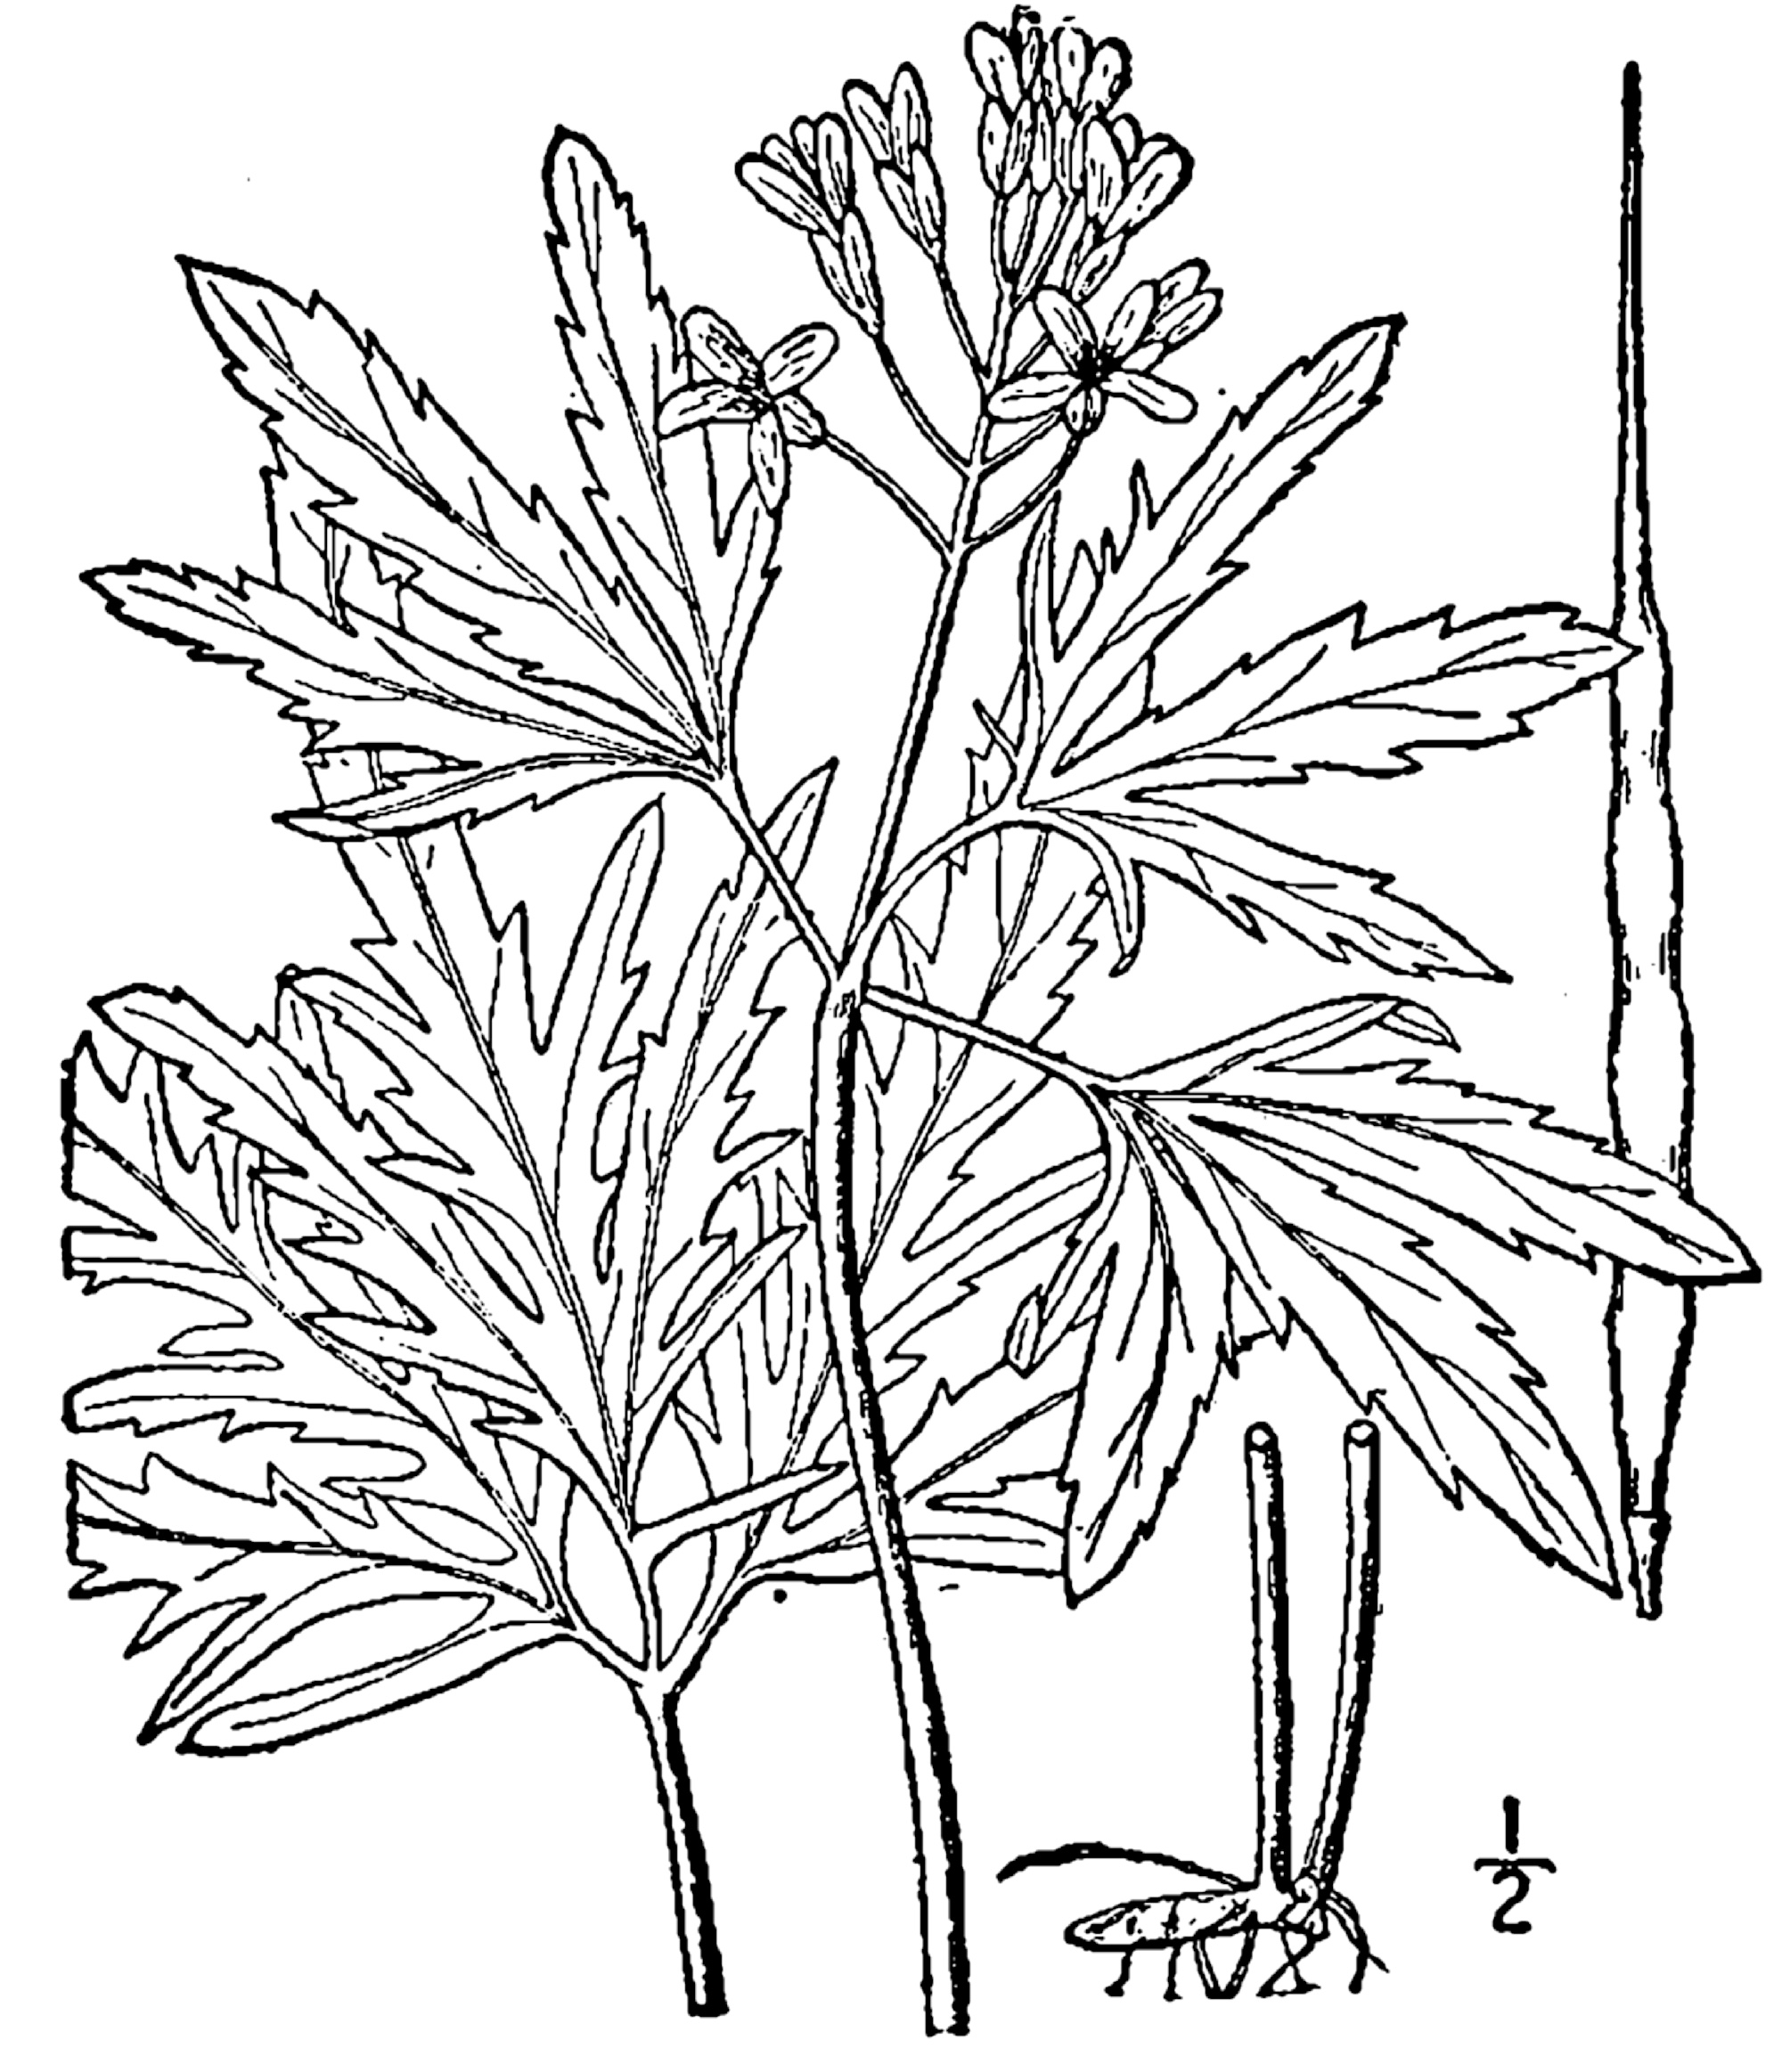 1913 Cutleaf Toothwort illustration